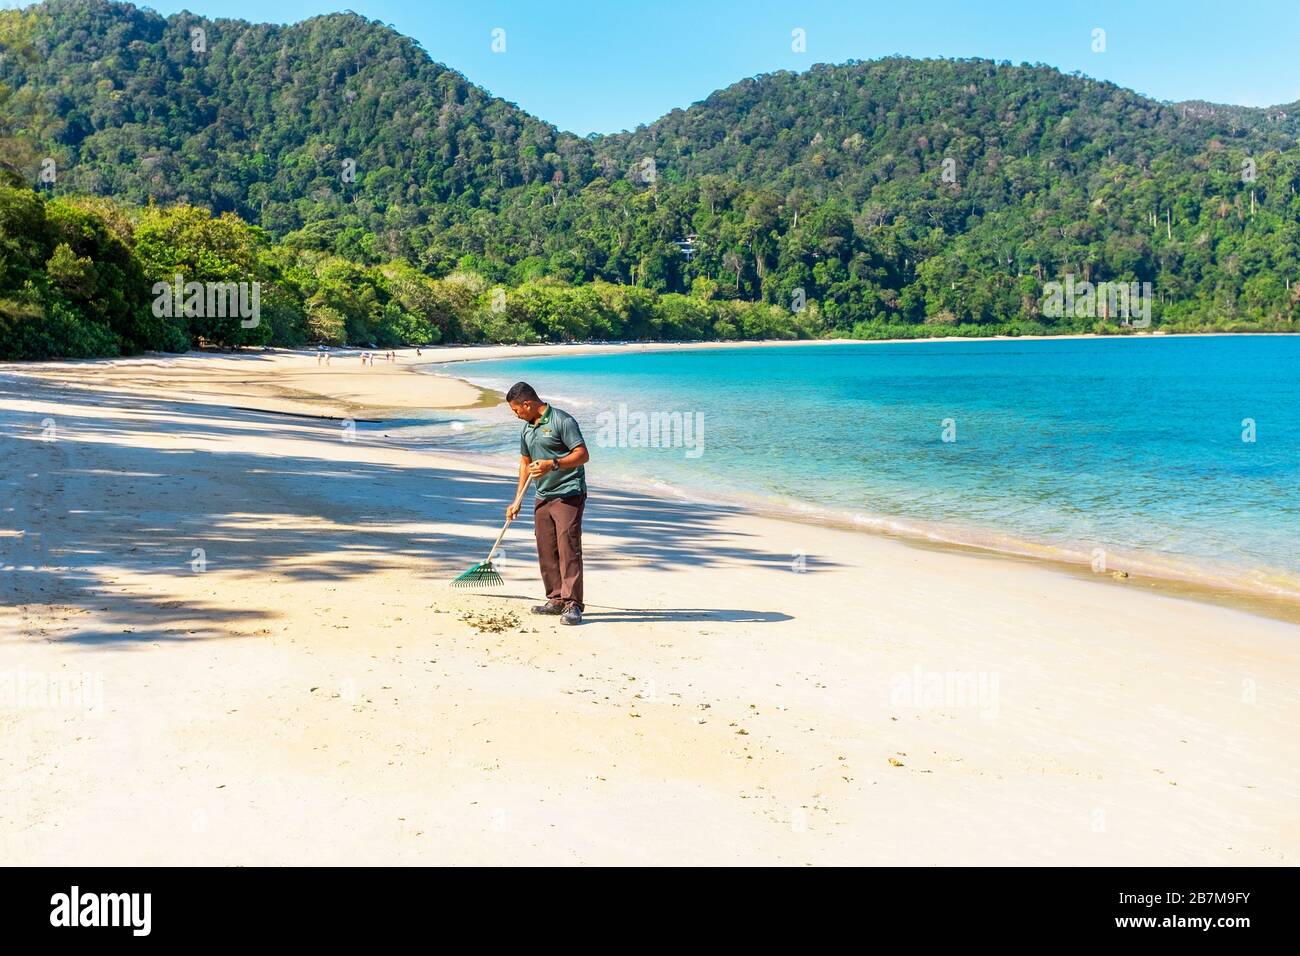 Man raking and cleaning the beach at Andaman, Langkawi, Malaysia, Asia Stock Photo